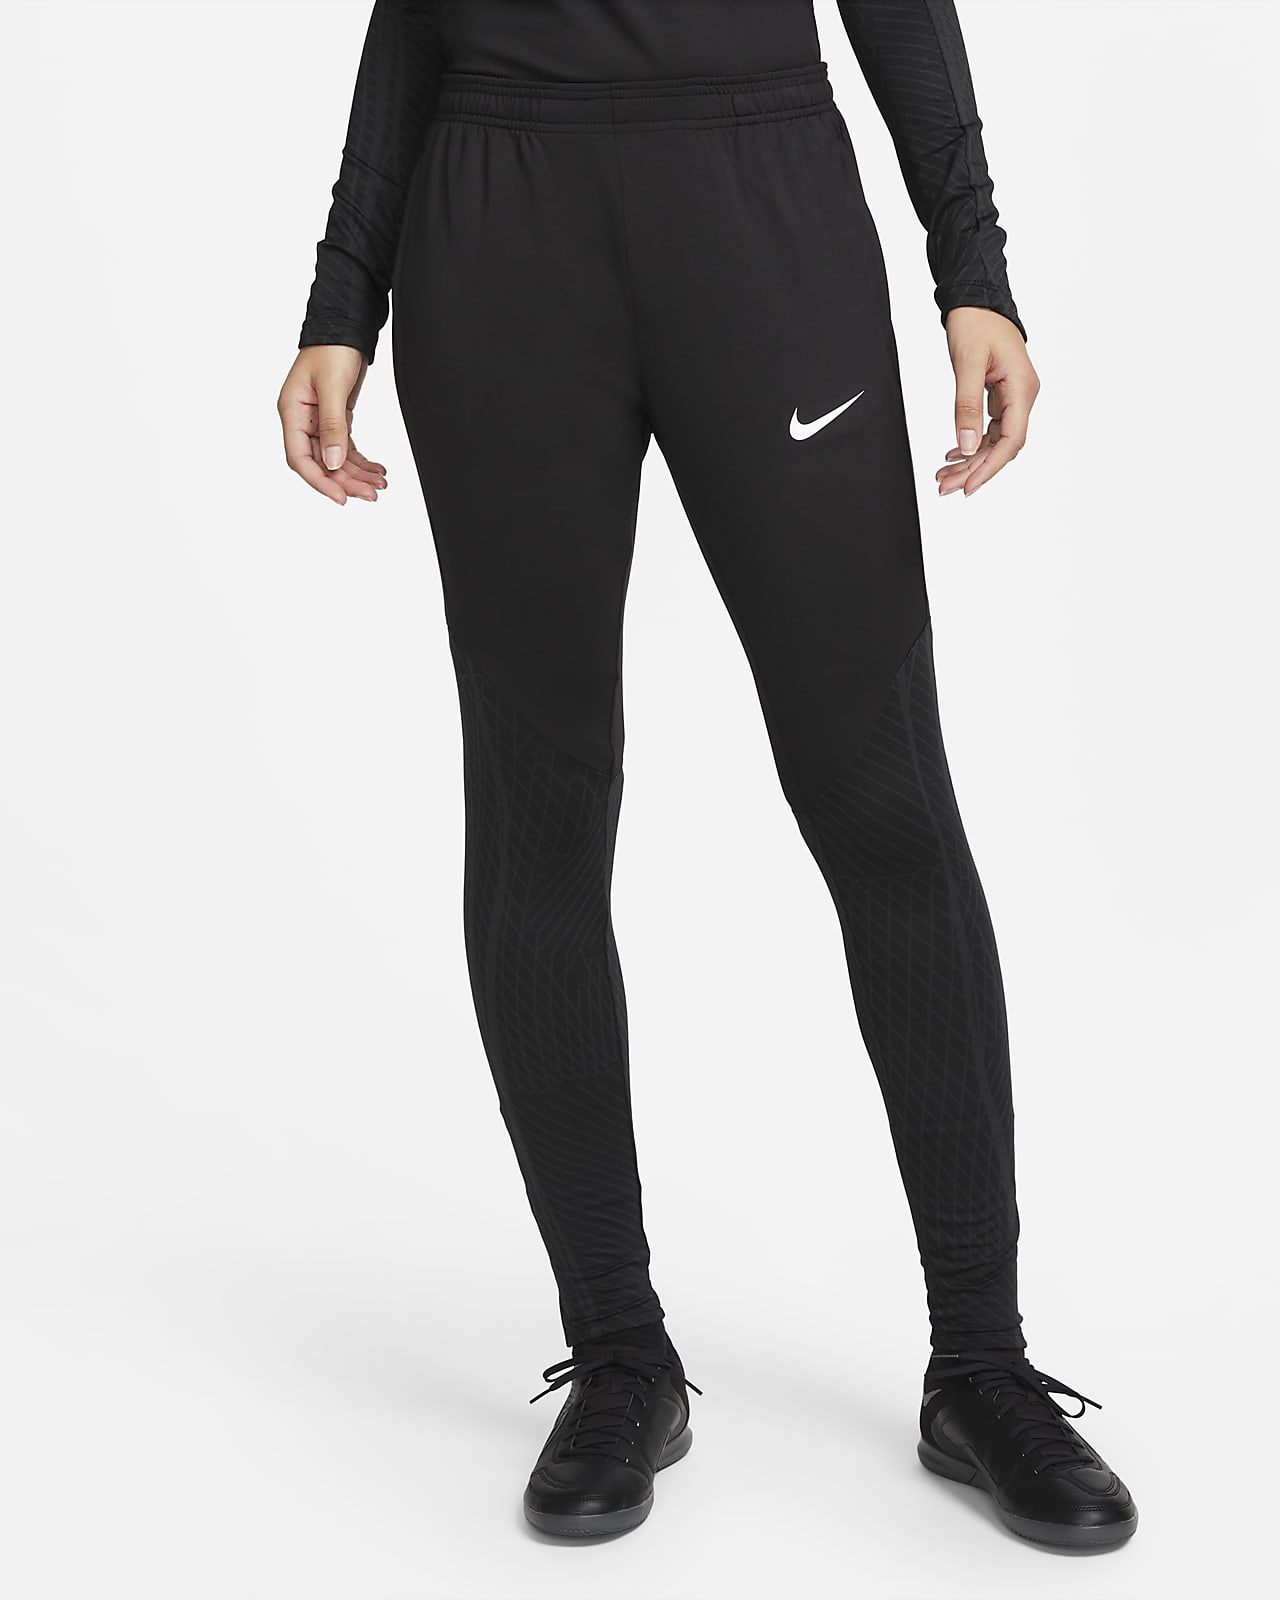 Pants de fútbol para mujer Dri-FIT Strike. Nike.com